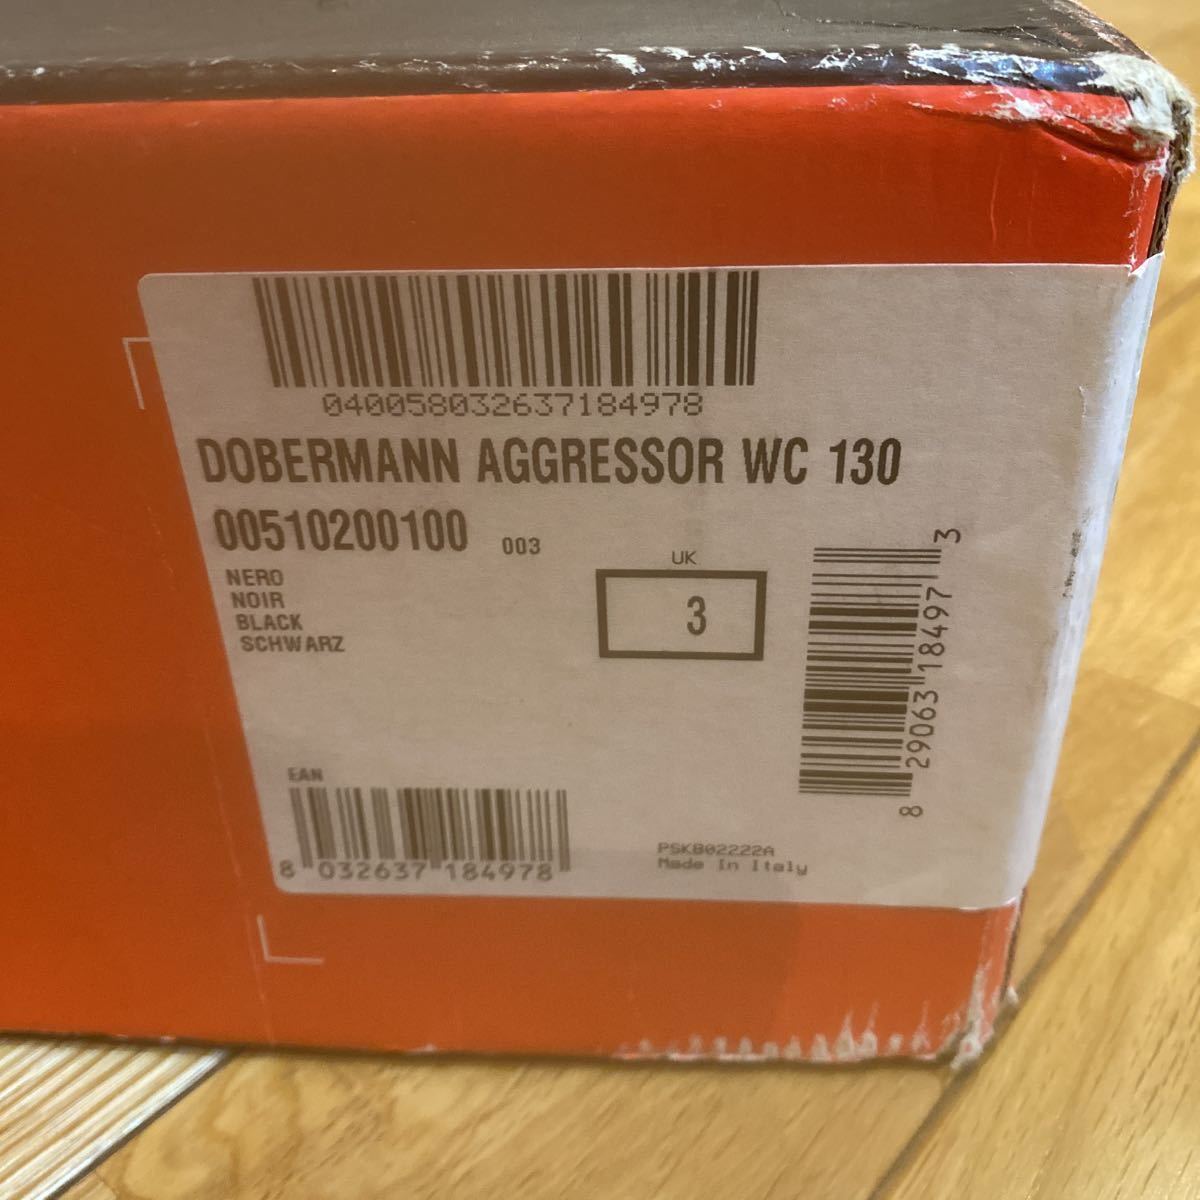  Nordica Doberman UGG resa-WC130 new goods storage goods free shipping Japan size 22.5 centimeter 